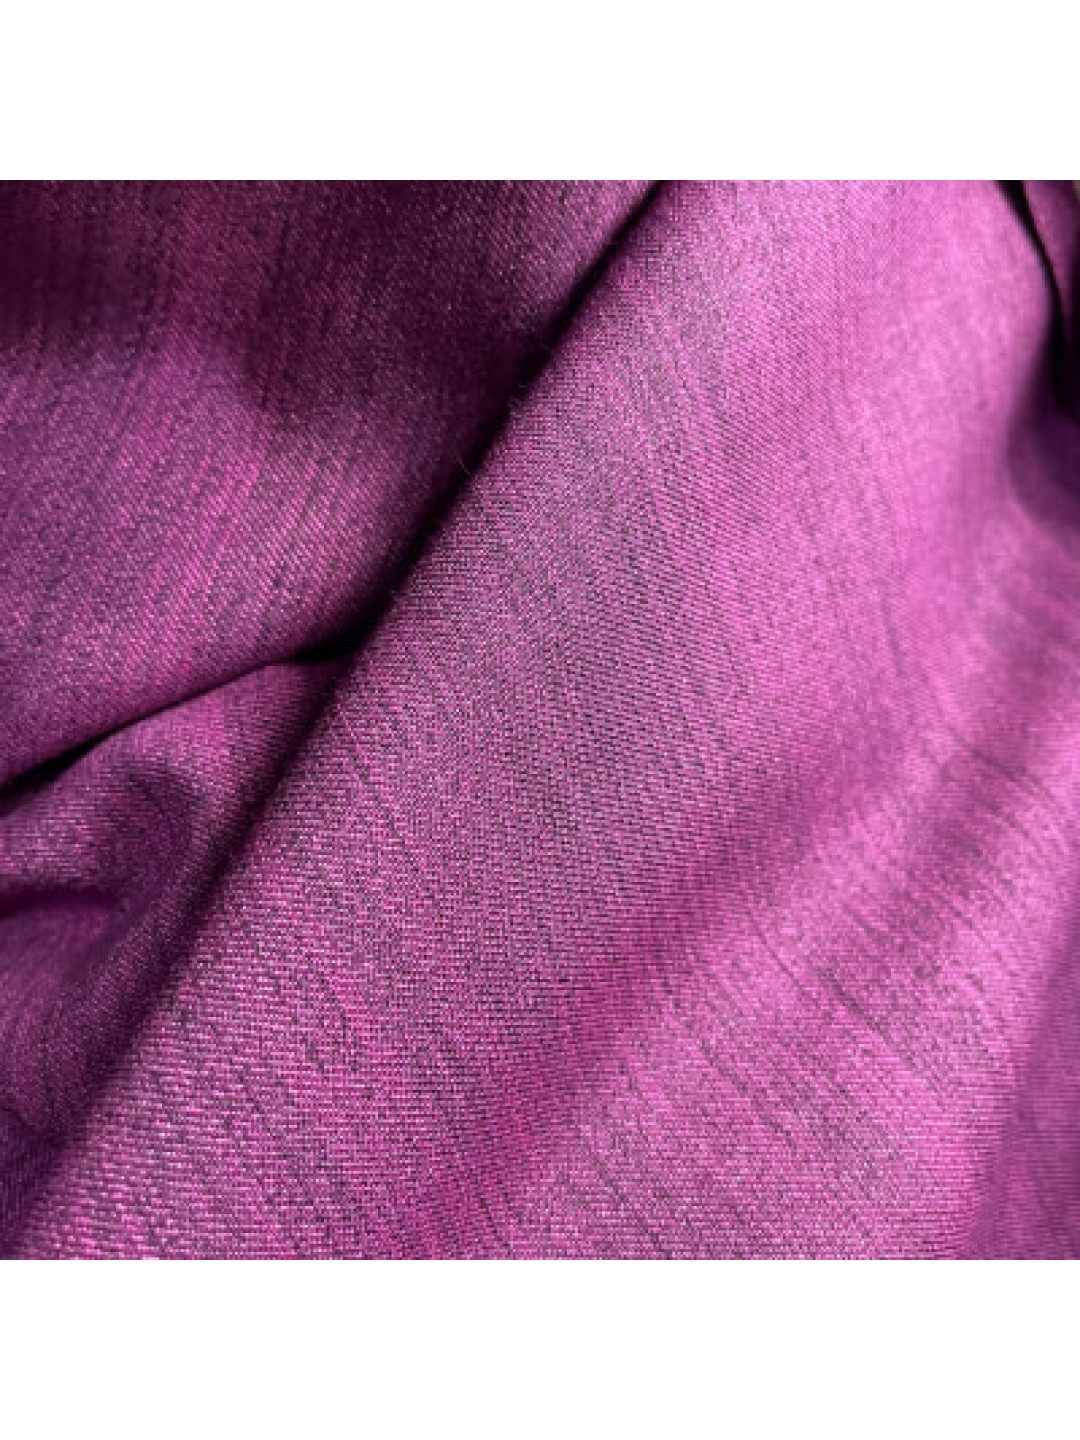 Onion Pink 7 Star Cashmere Fabric per yard 